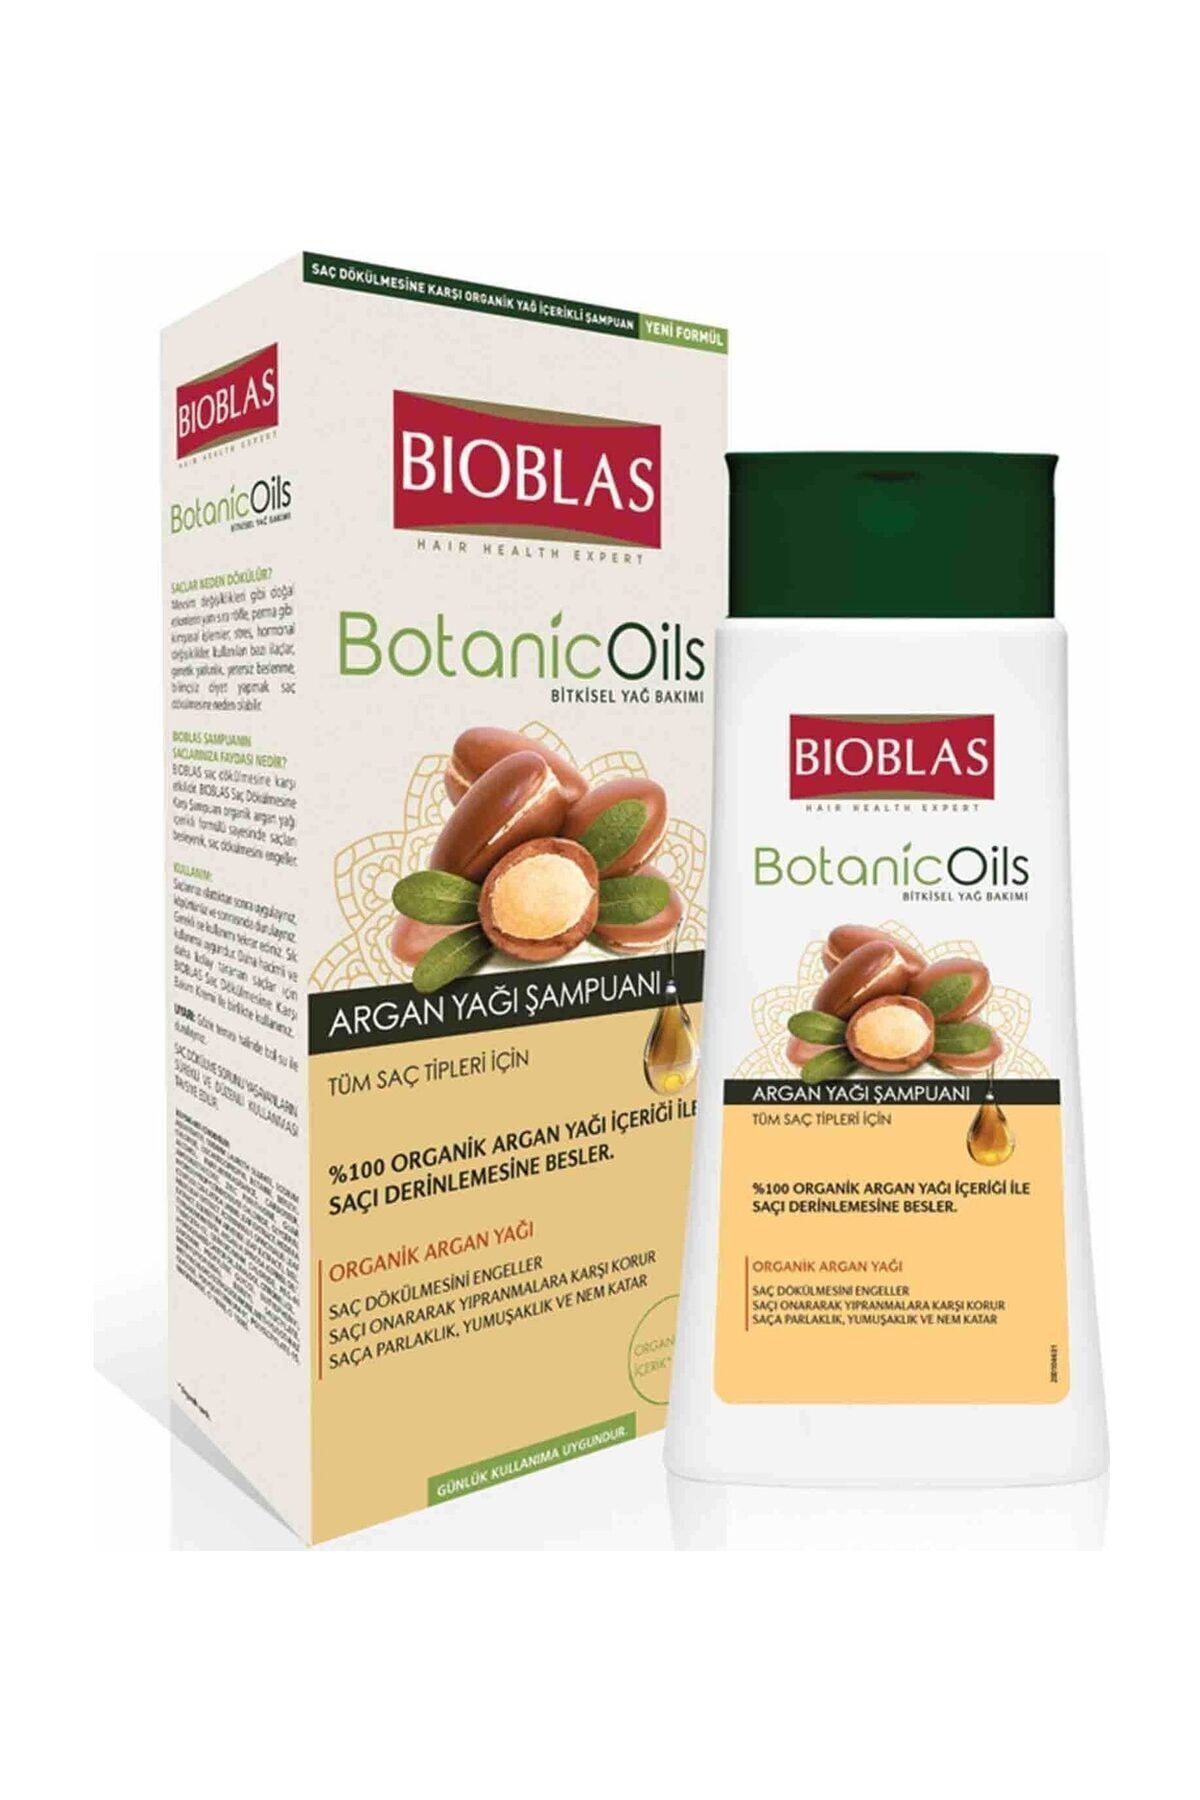 Bioblas Botanic Oils Argan Şampuan 360 ml